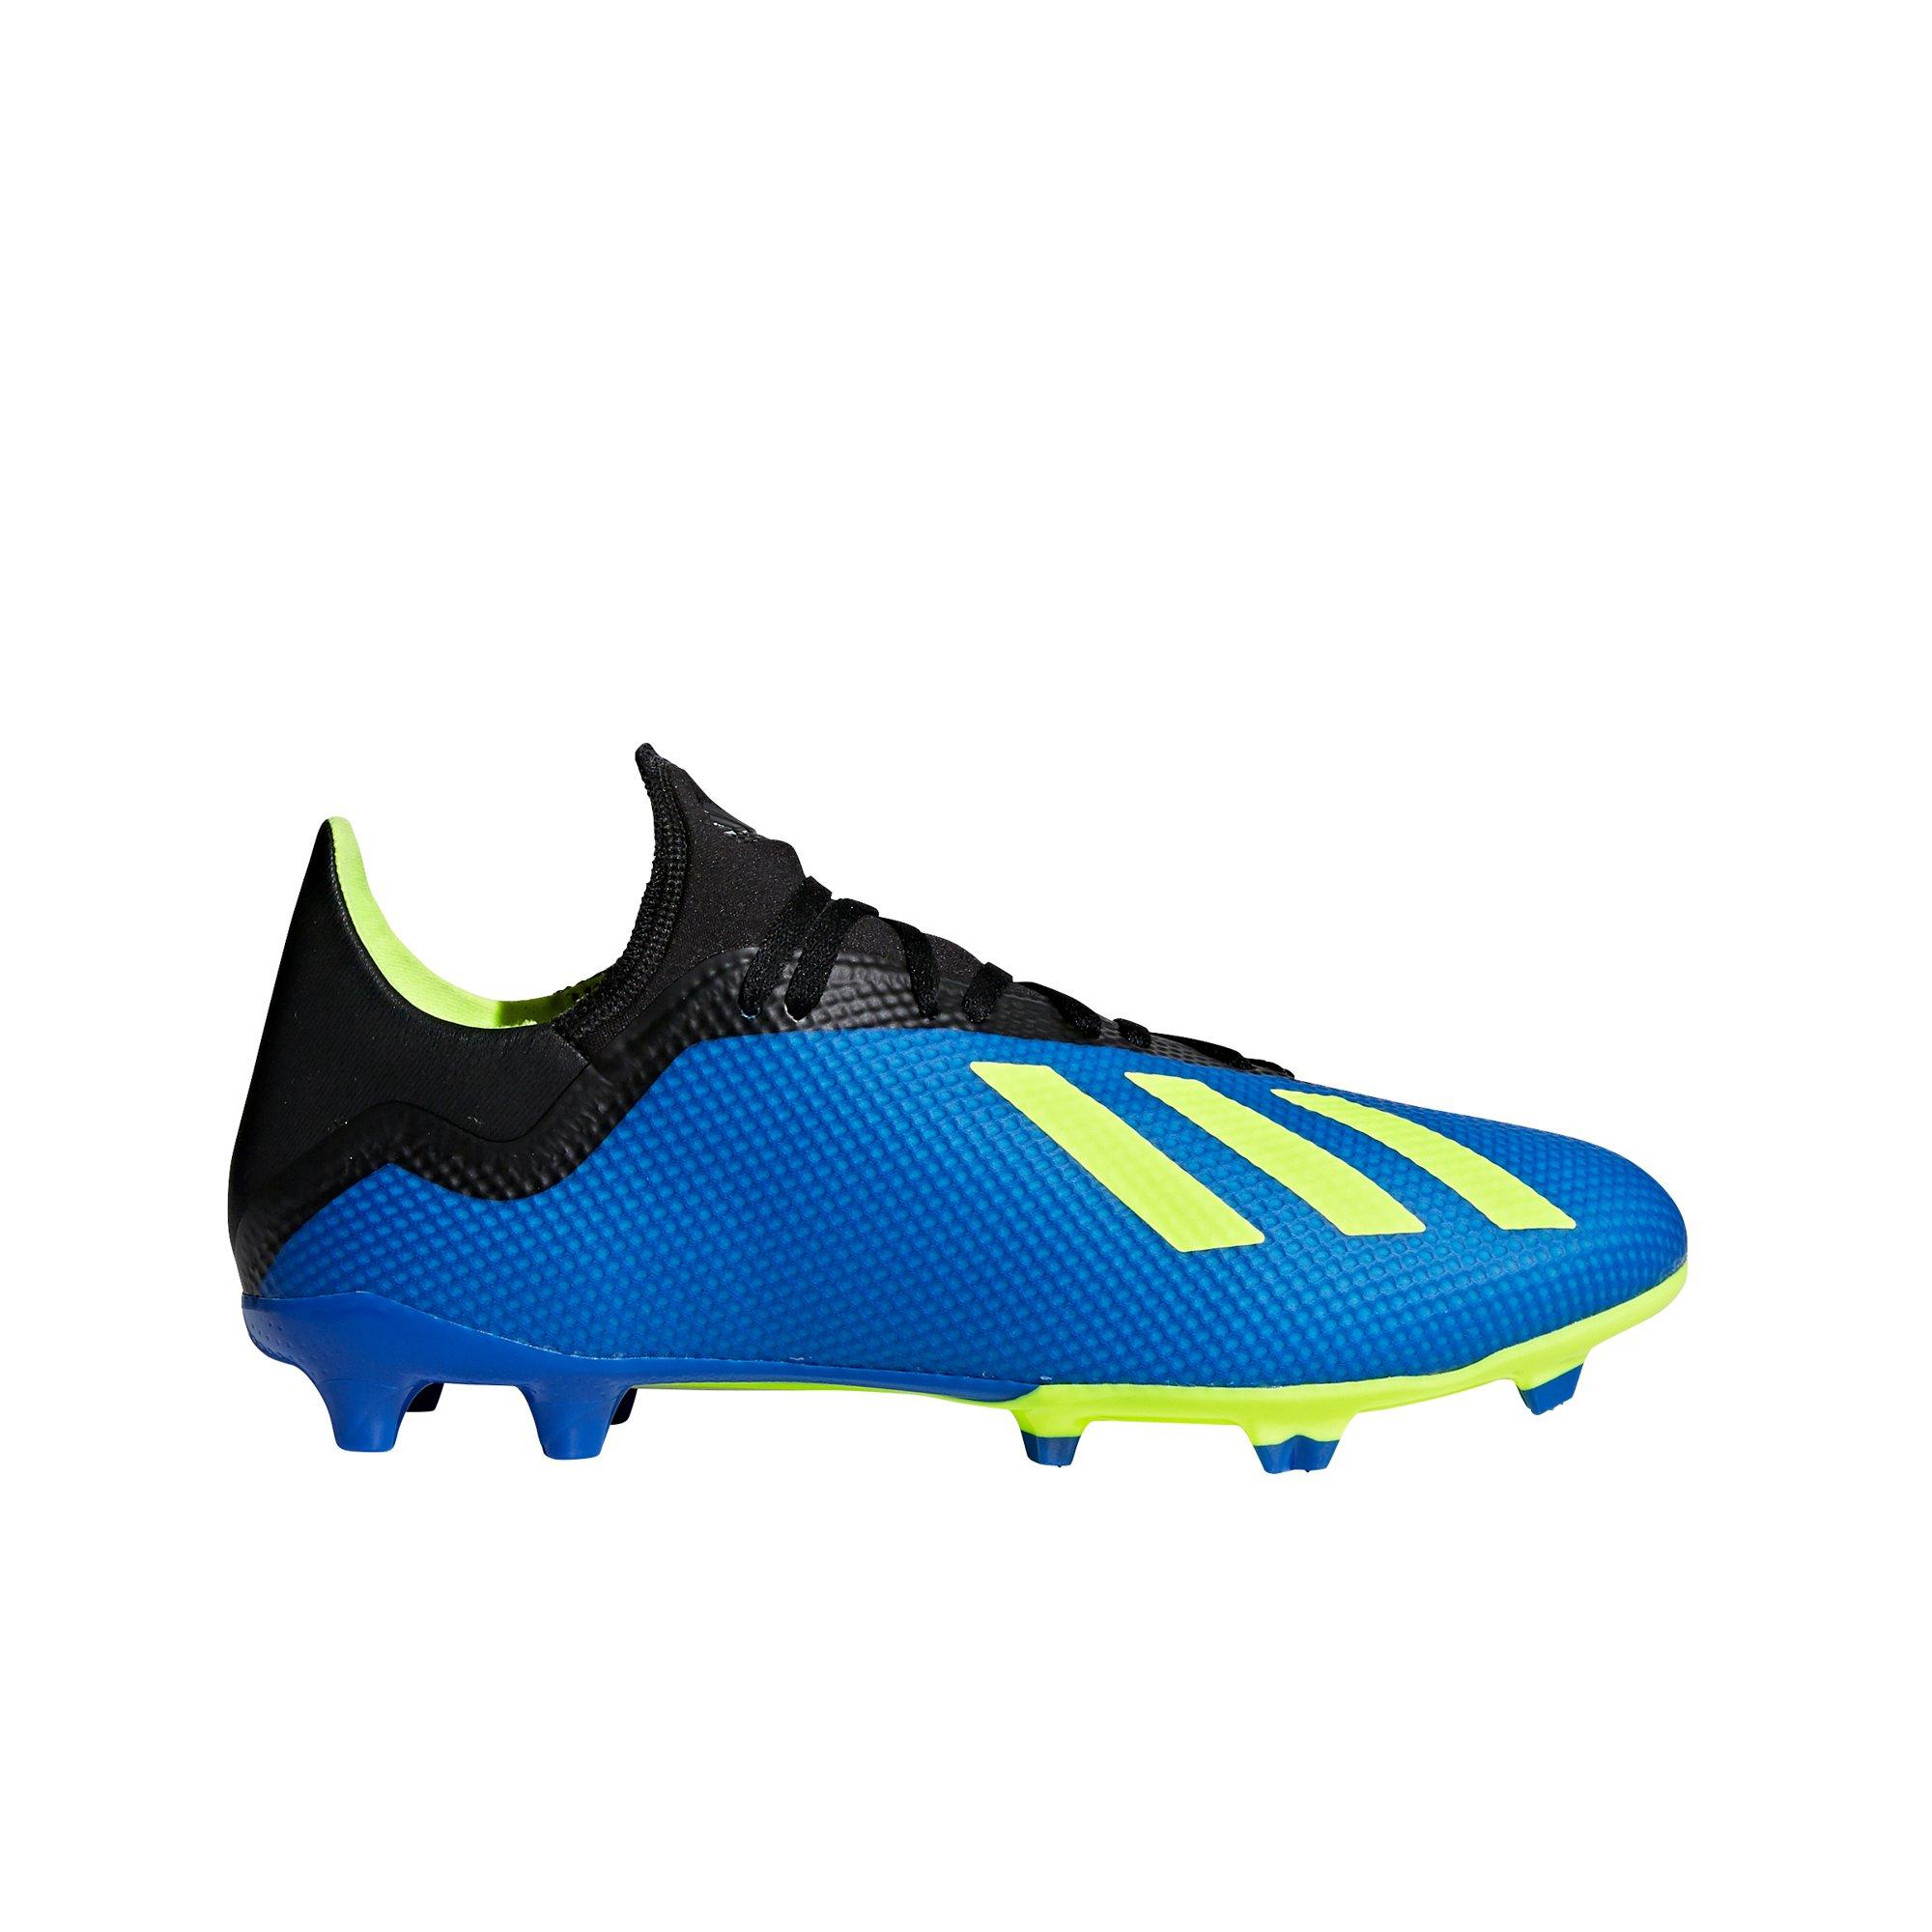 adidas football shoes 18.3